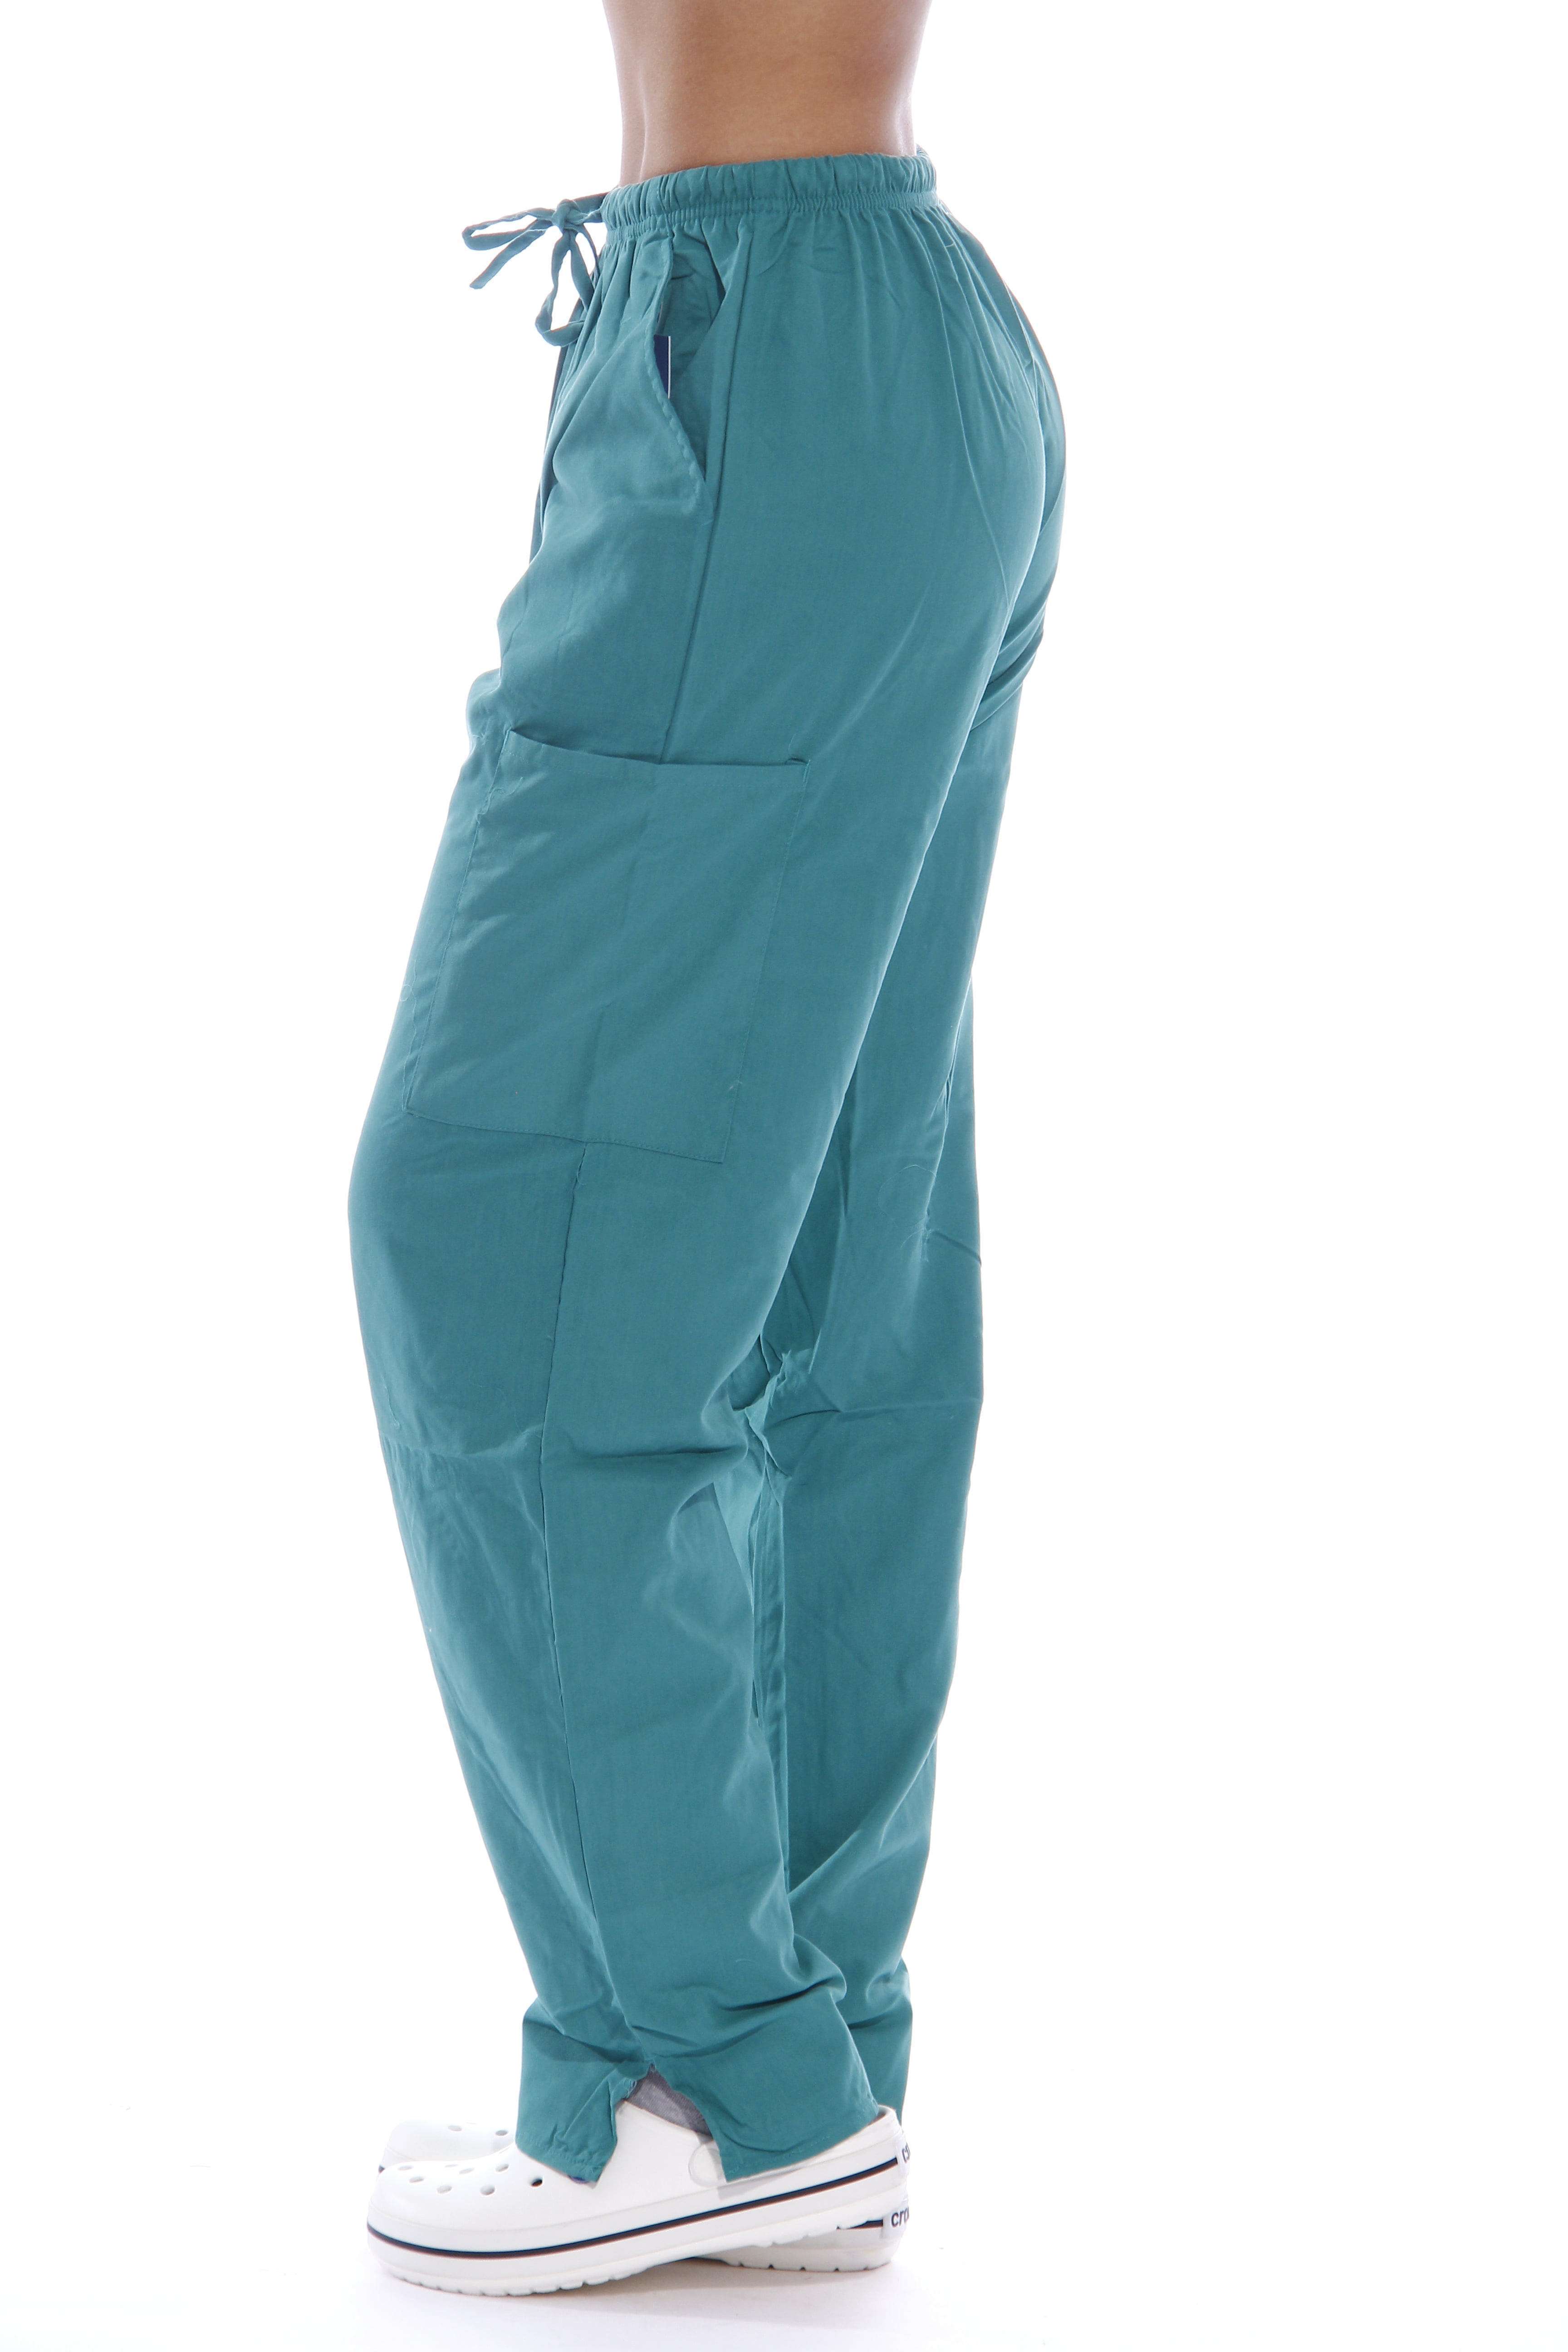 Dreamcrest - Dreamcrest Ultra Soft Women's Scrub Pants / Medical Scrubs ...